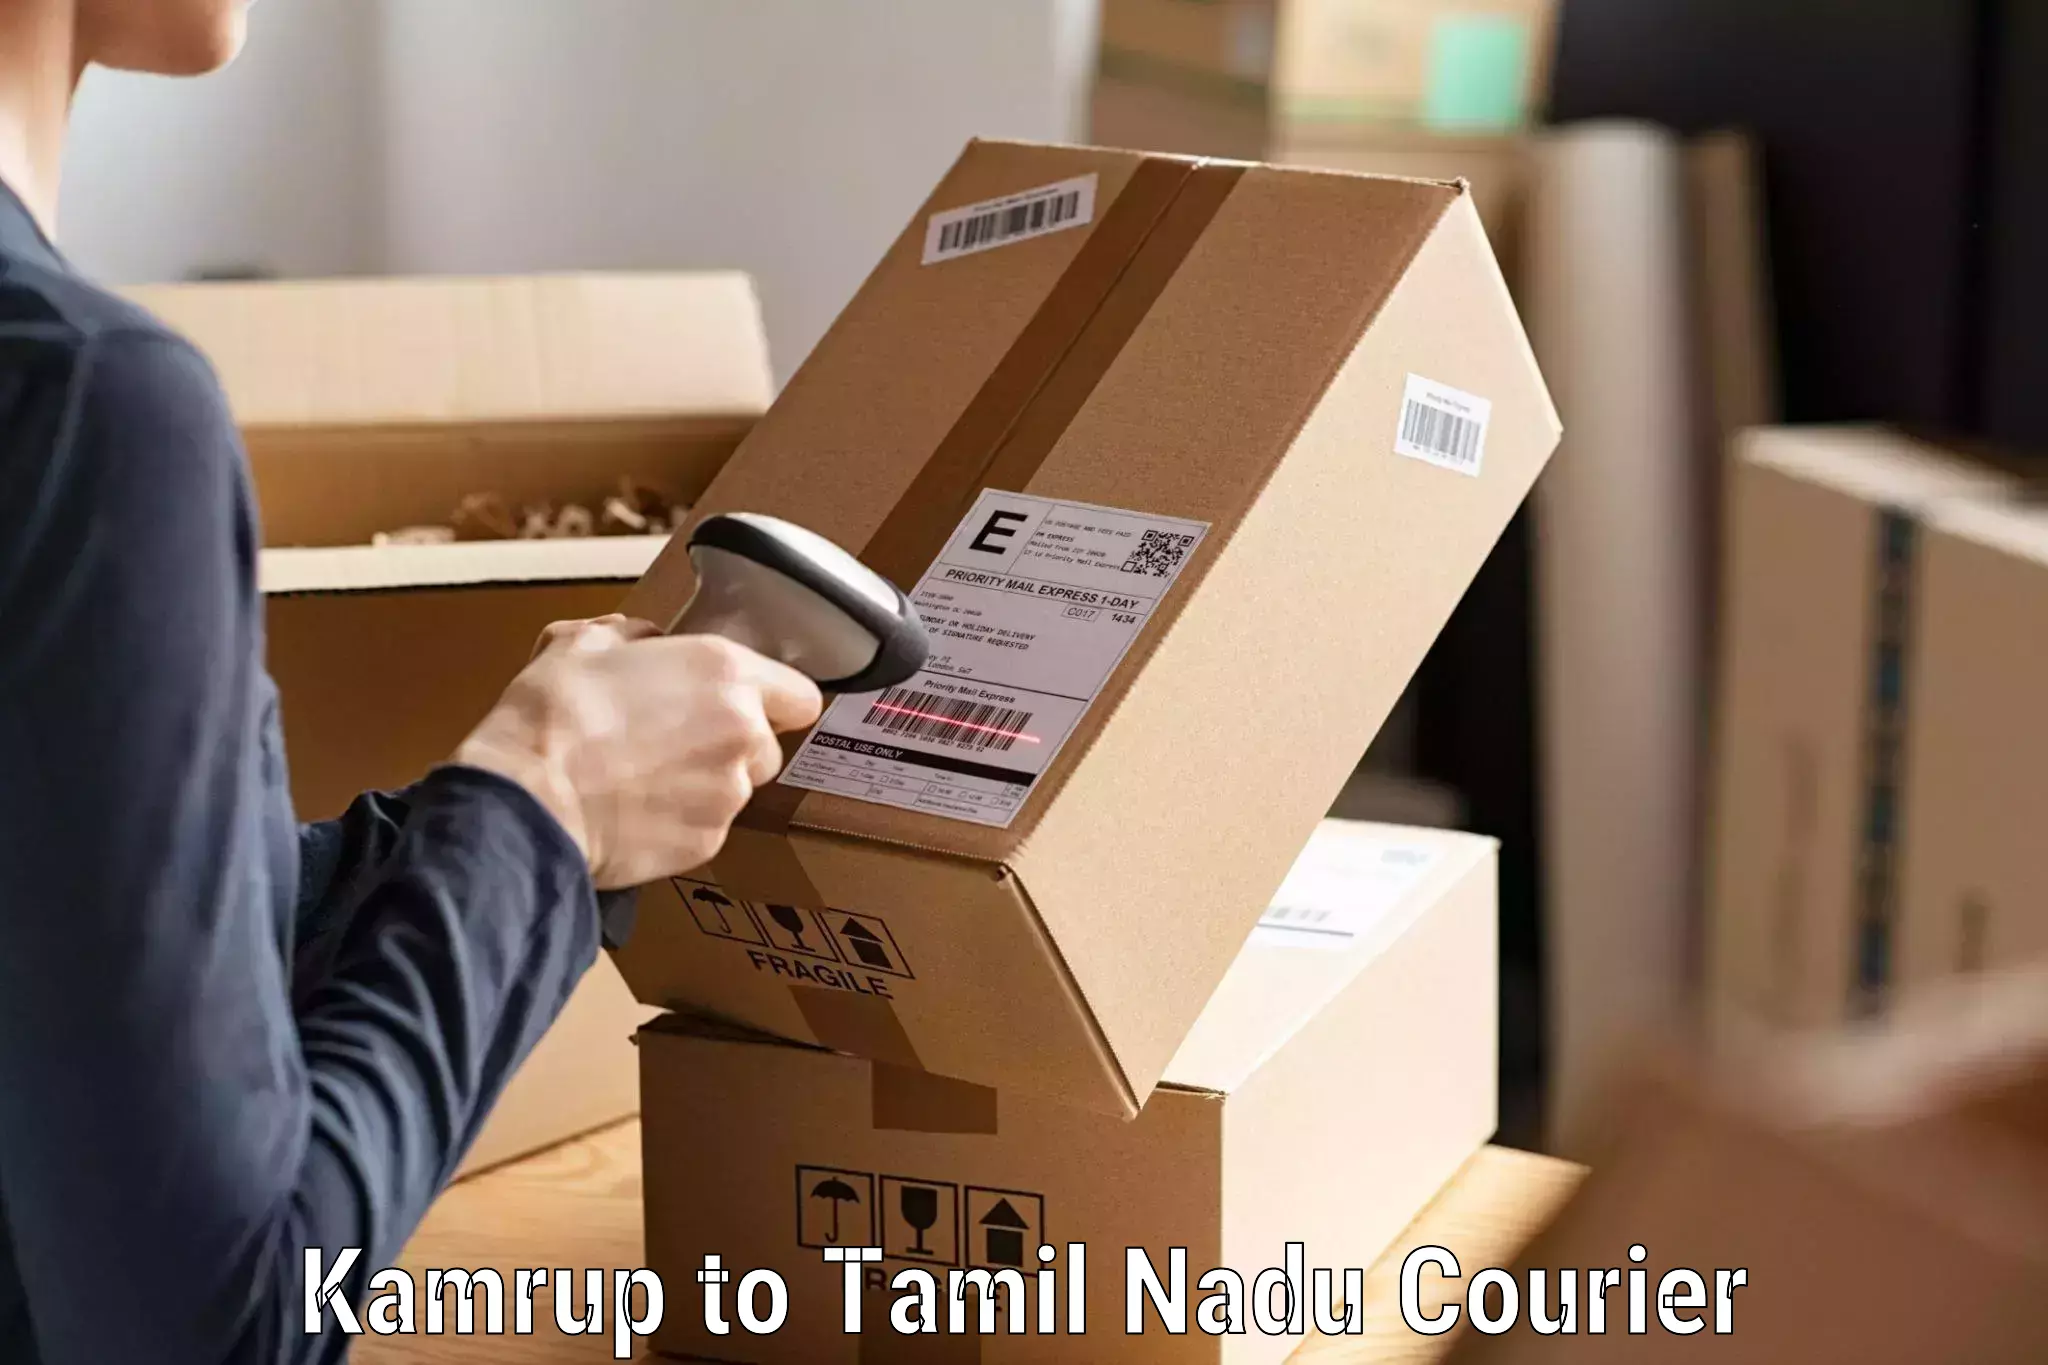 Express delivery capabilities Kamrup to Thoothukudi